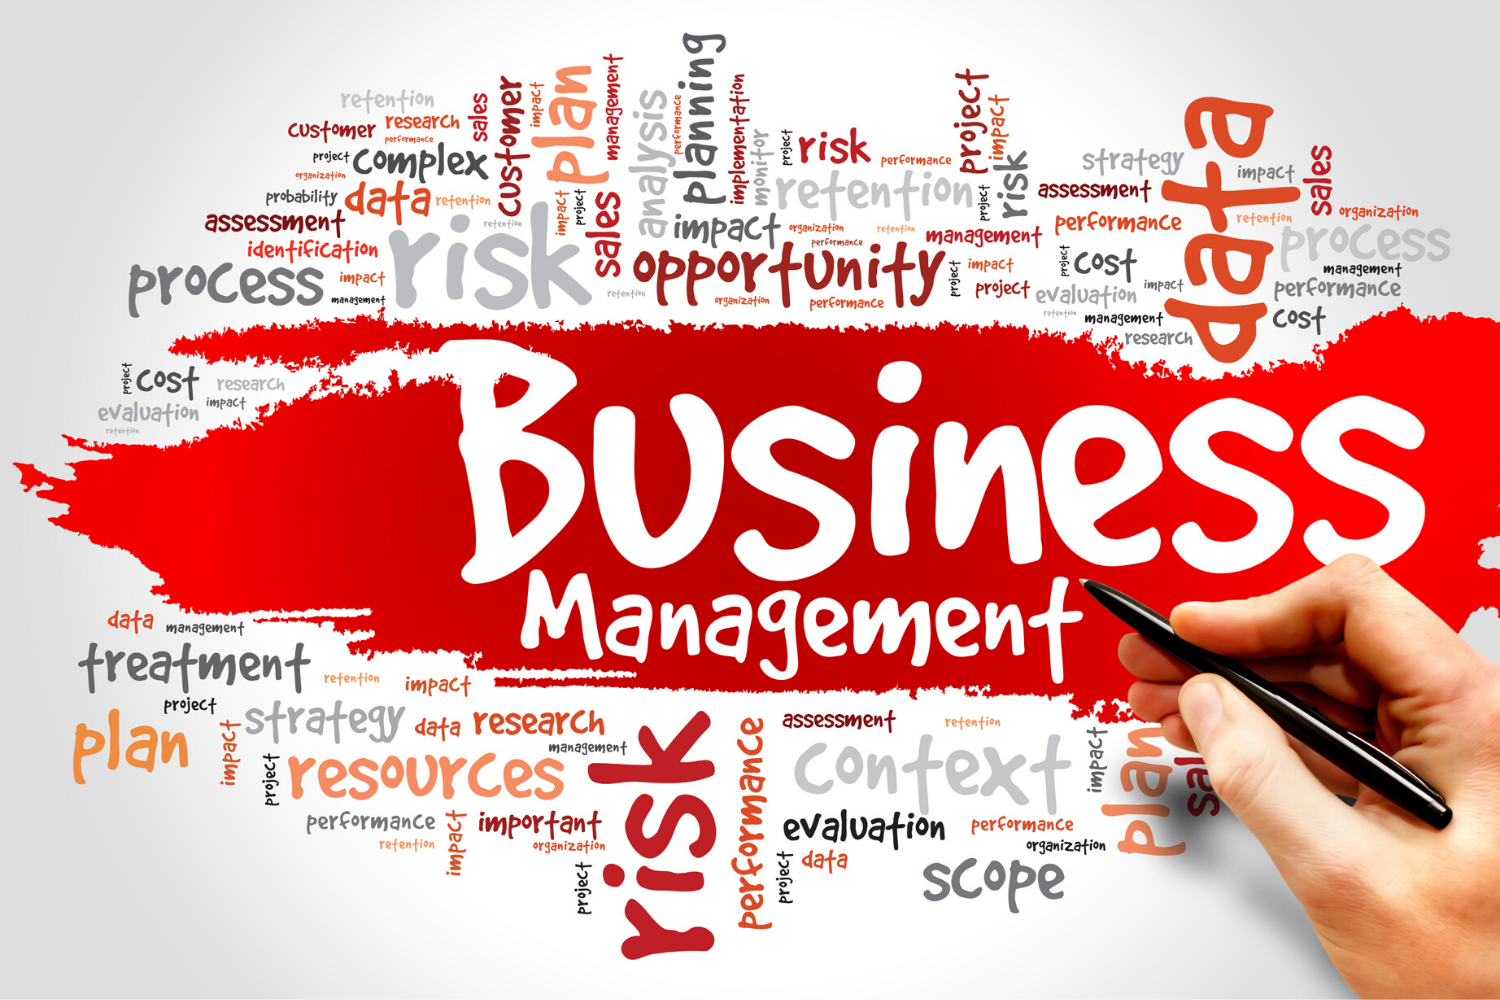 business management 